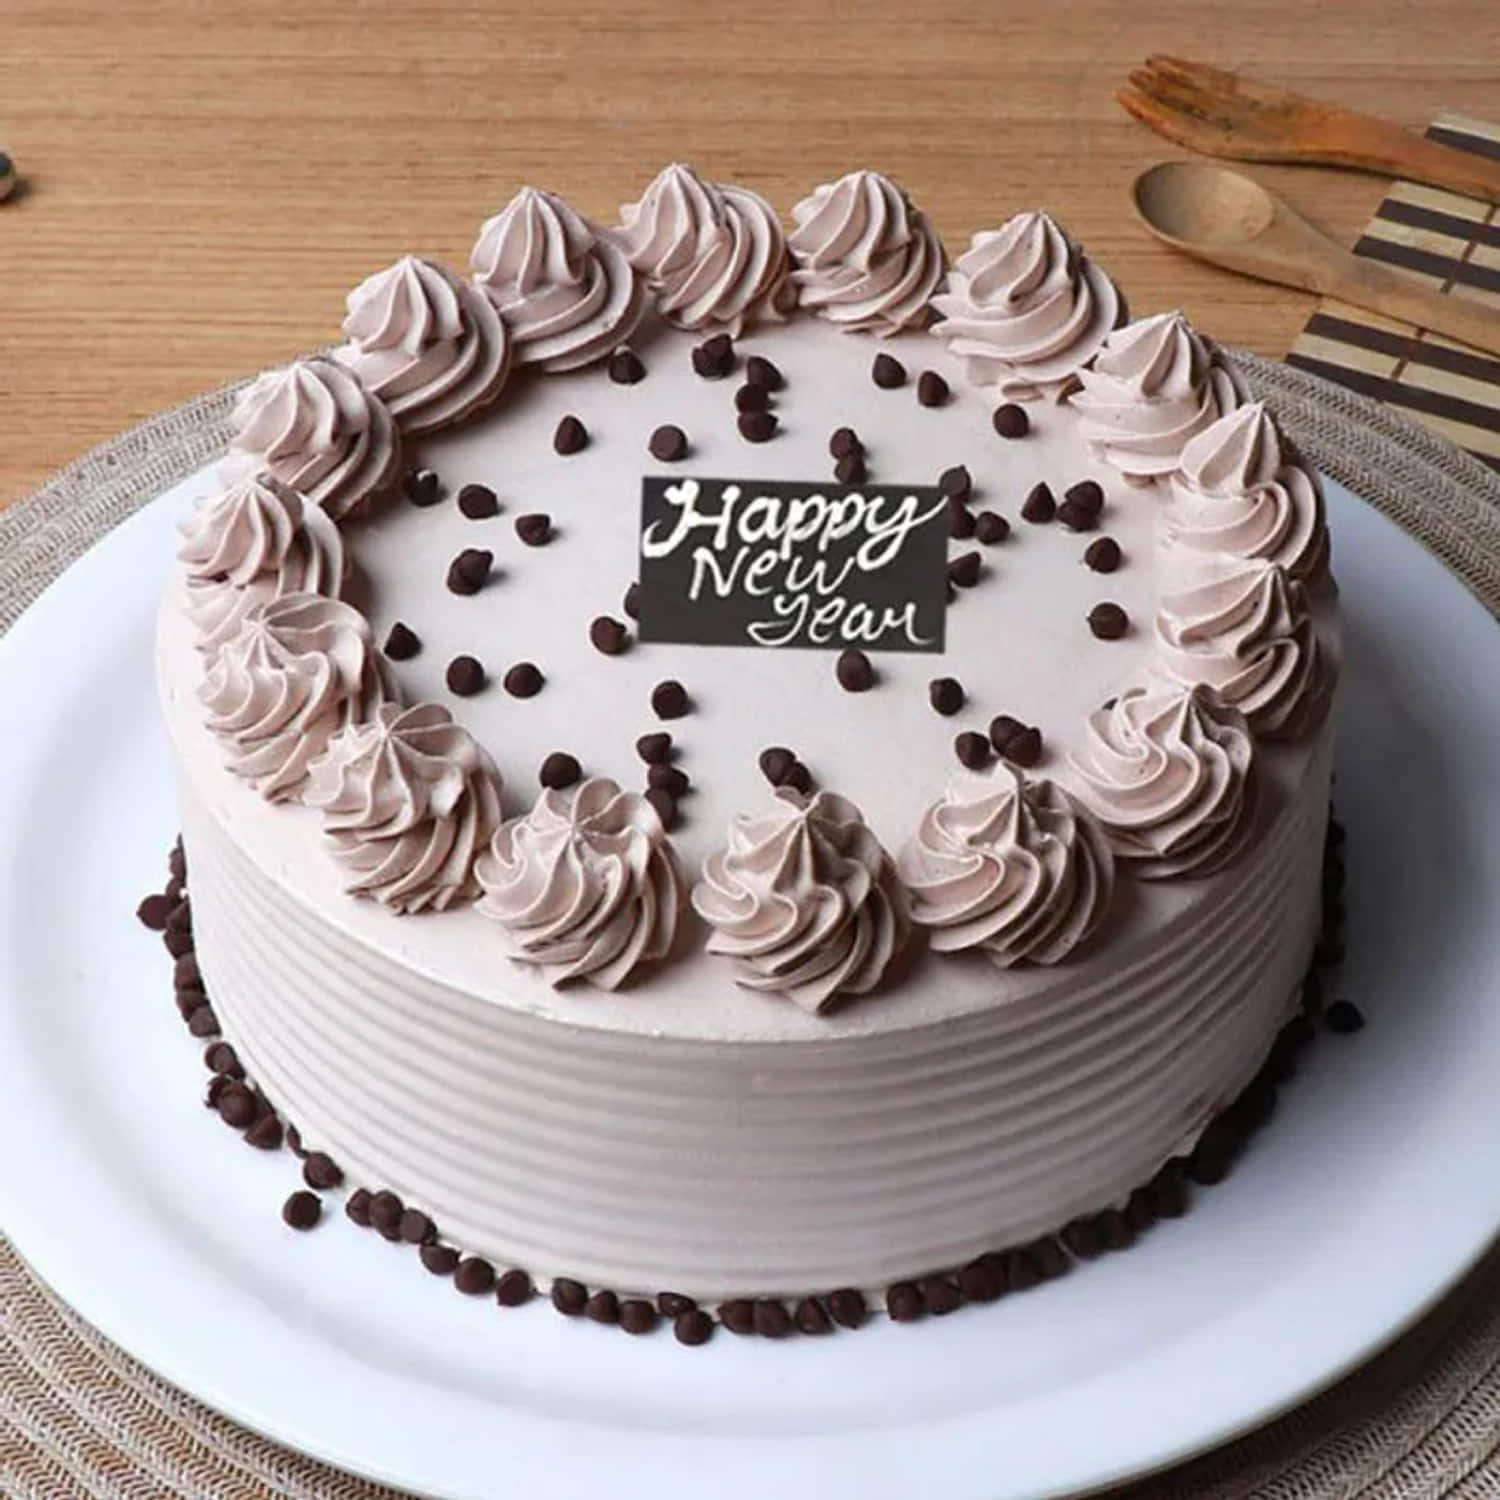 Vanilla Ice Cakes - Rose & Pistachio Celebration Cake